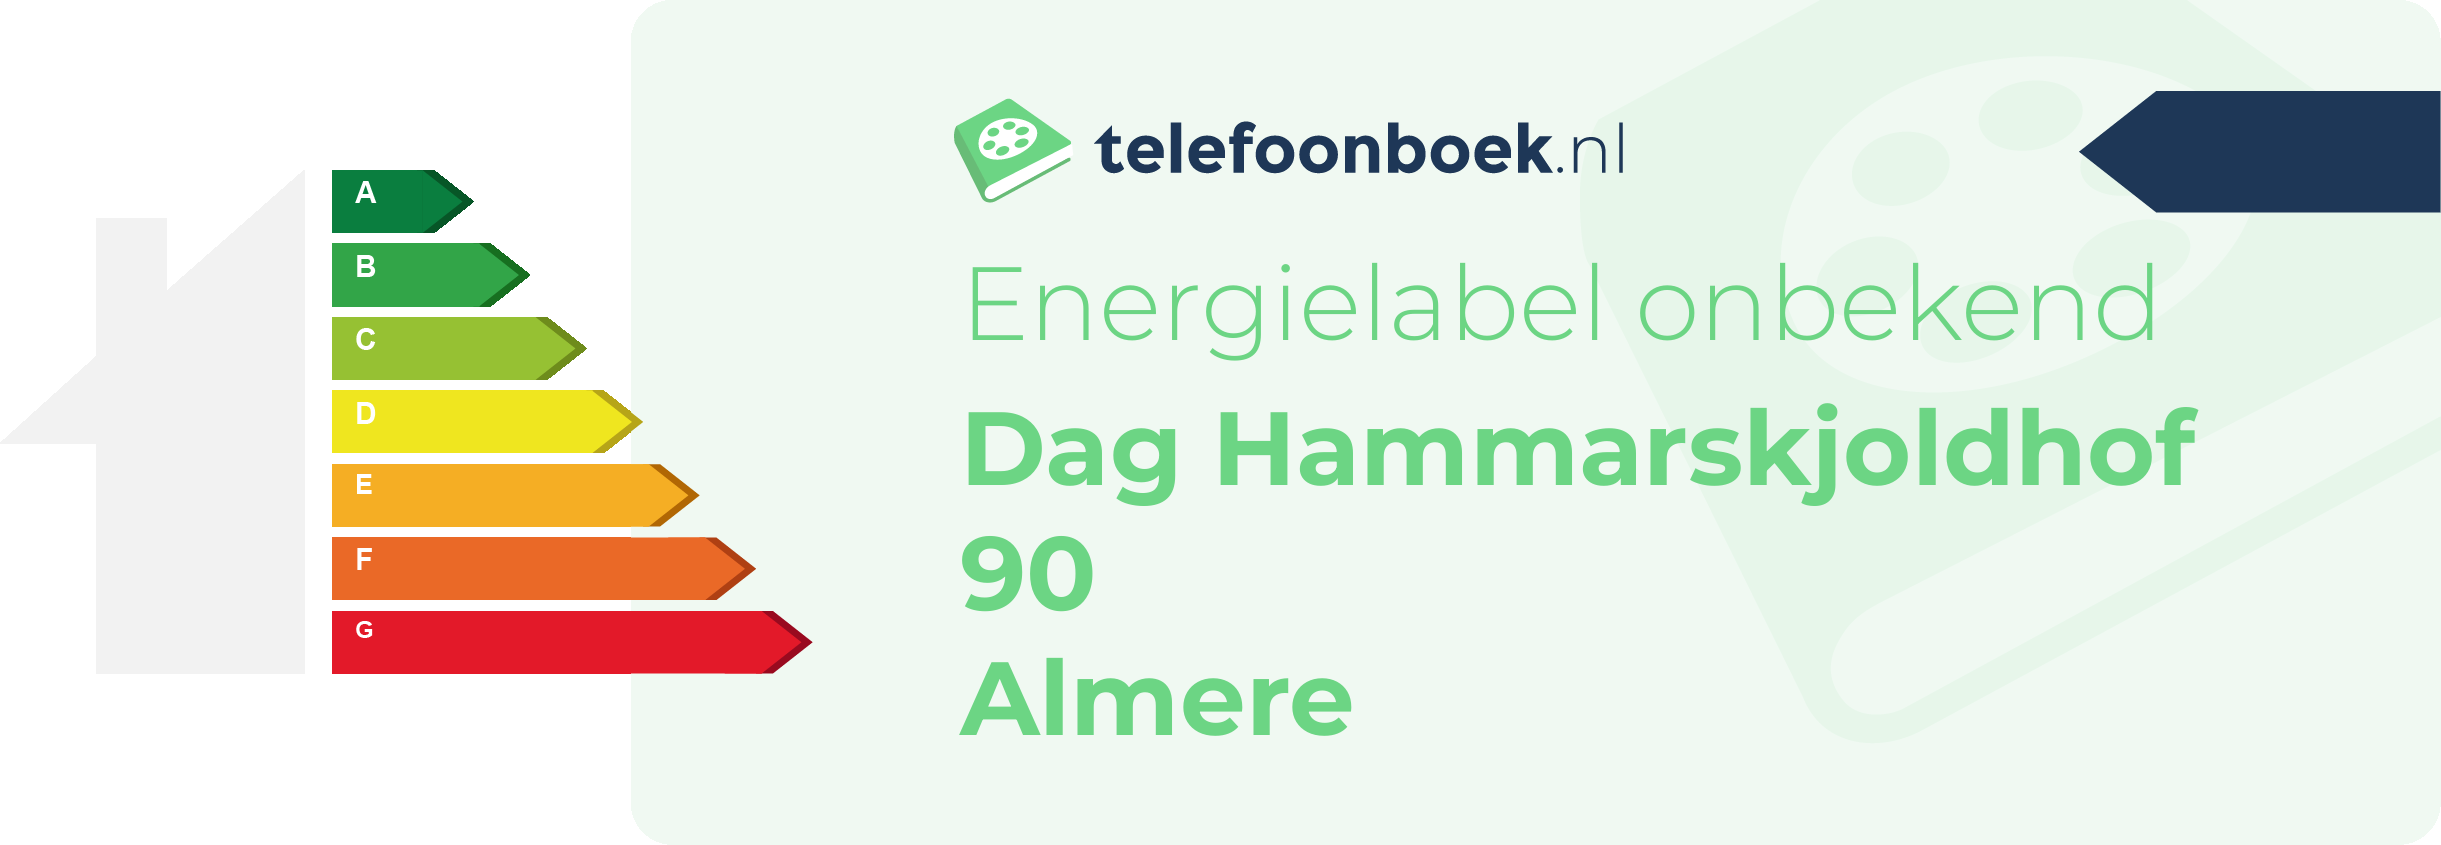 Energielabel Dag Hammarskjoldhof 90 Almere